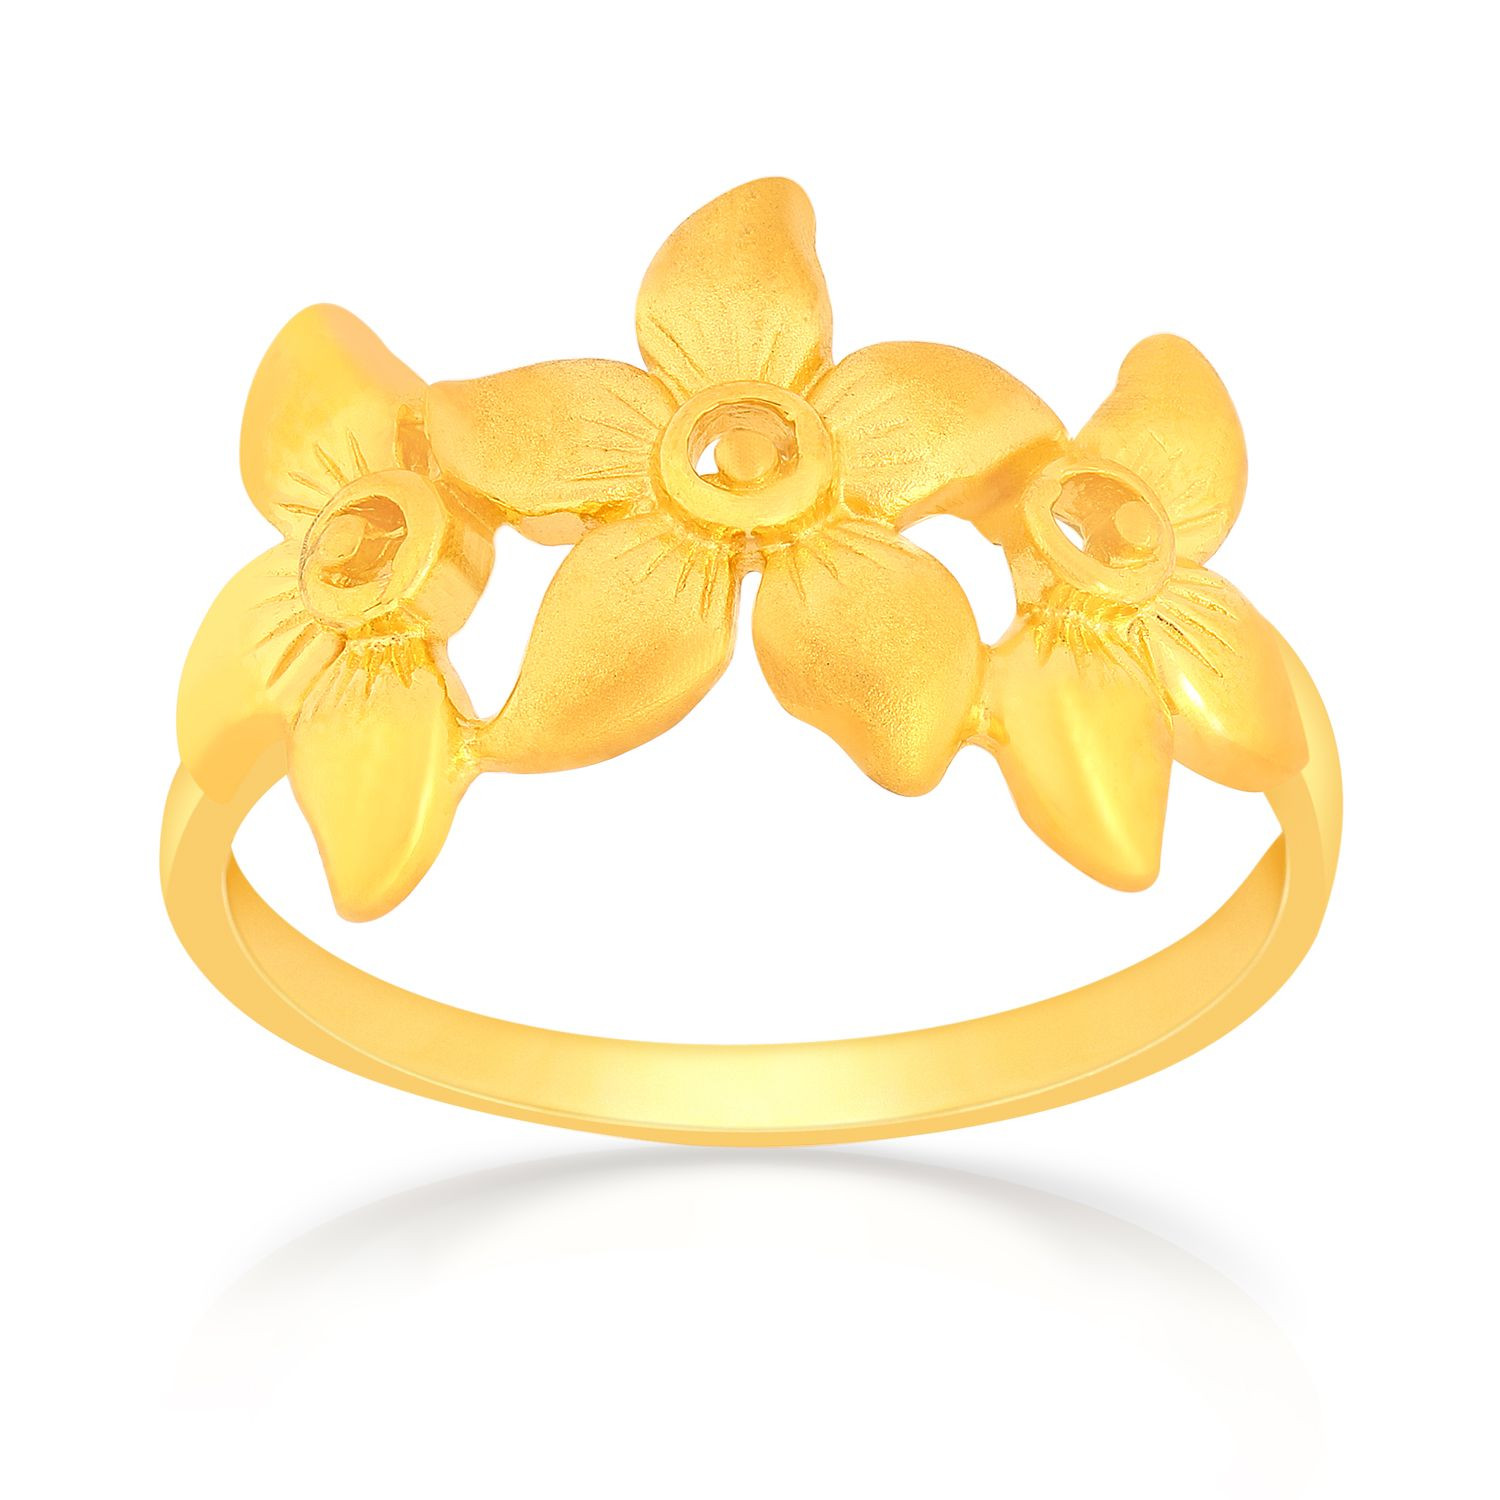 Malabar 22 KT Gold Studded Casual Ring SKYFRDZ054